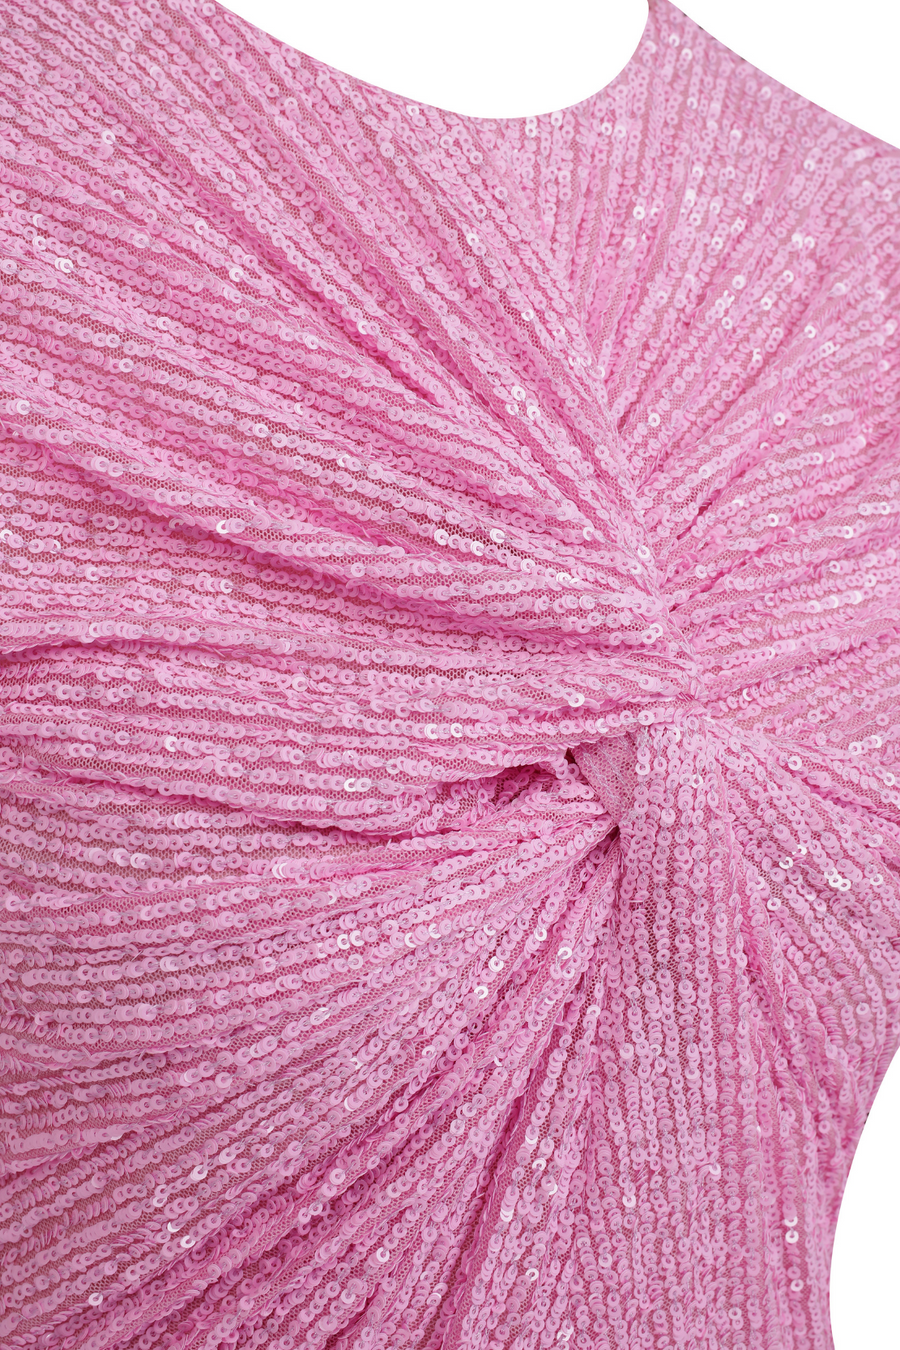 Knot Pink Sequin Dress